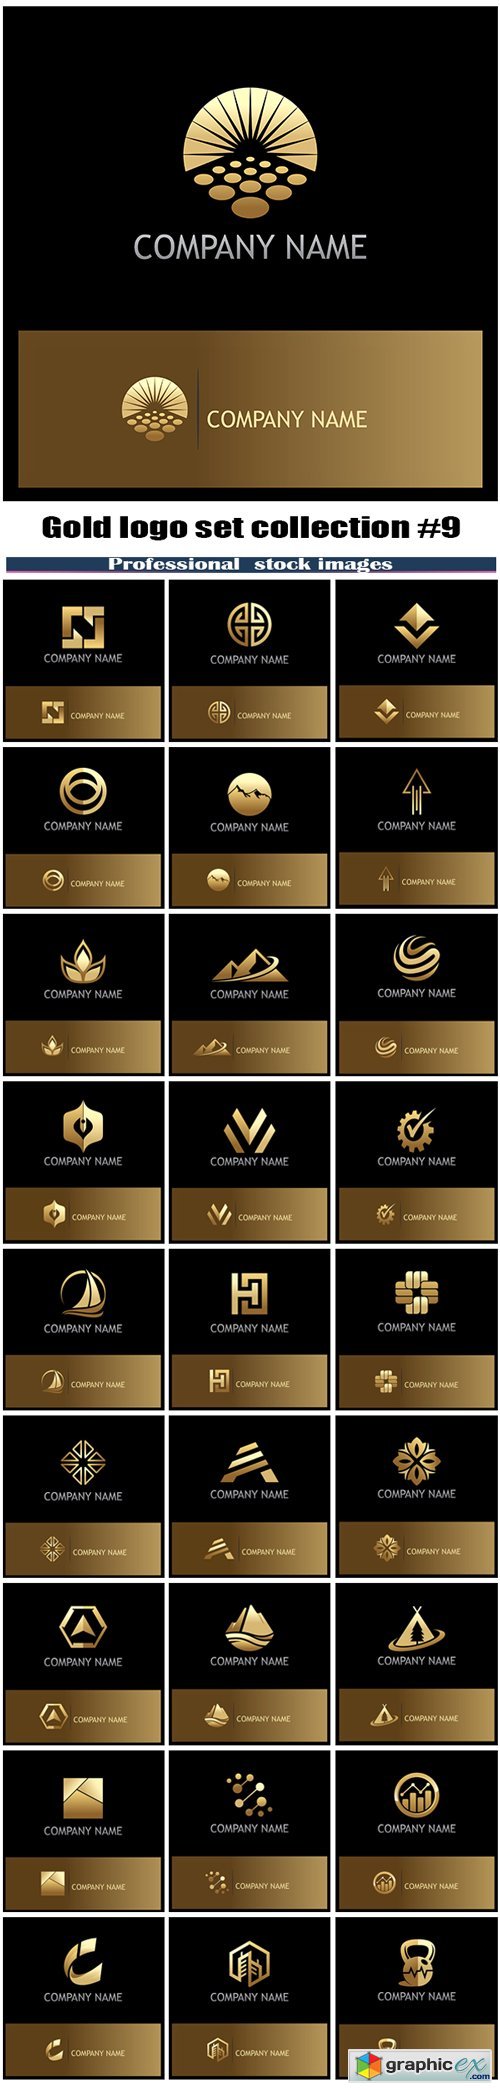 Gold logo set collection #9